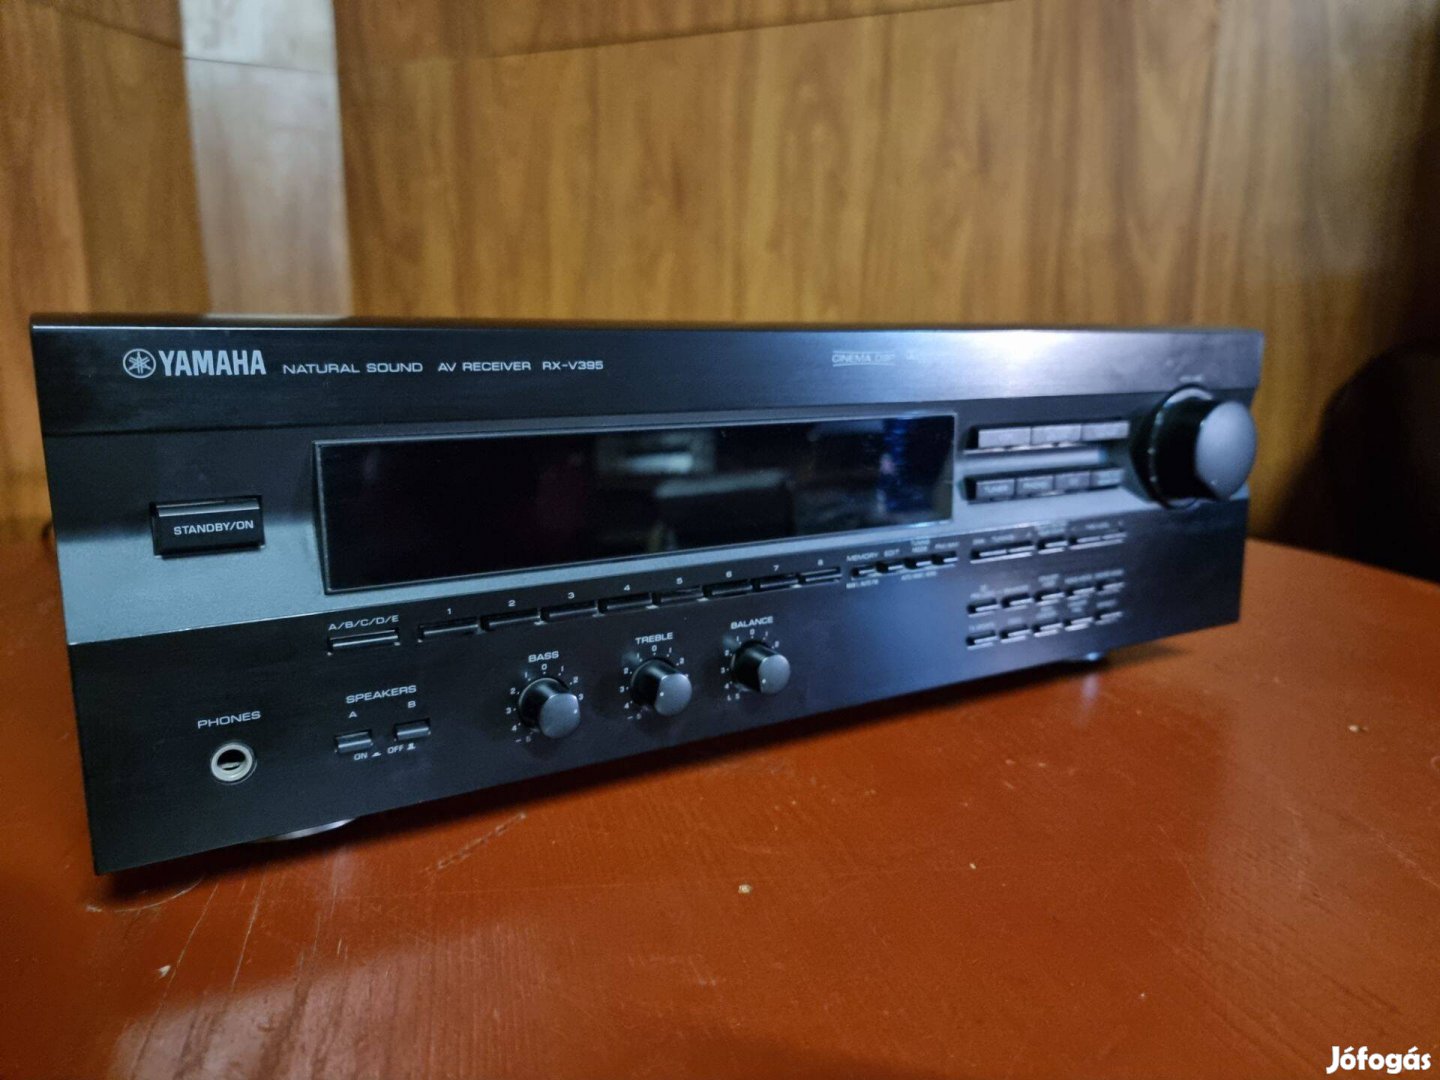 Yamaha RX-V395 házimozi erősítő 5.1 av receiver